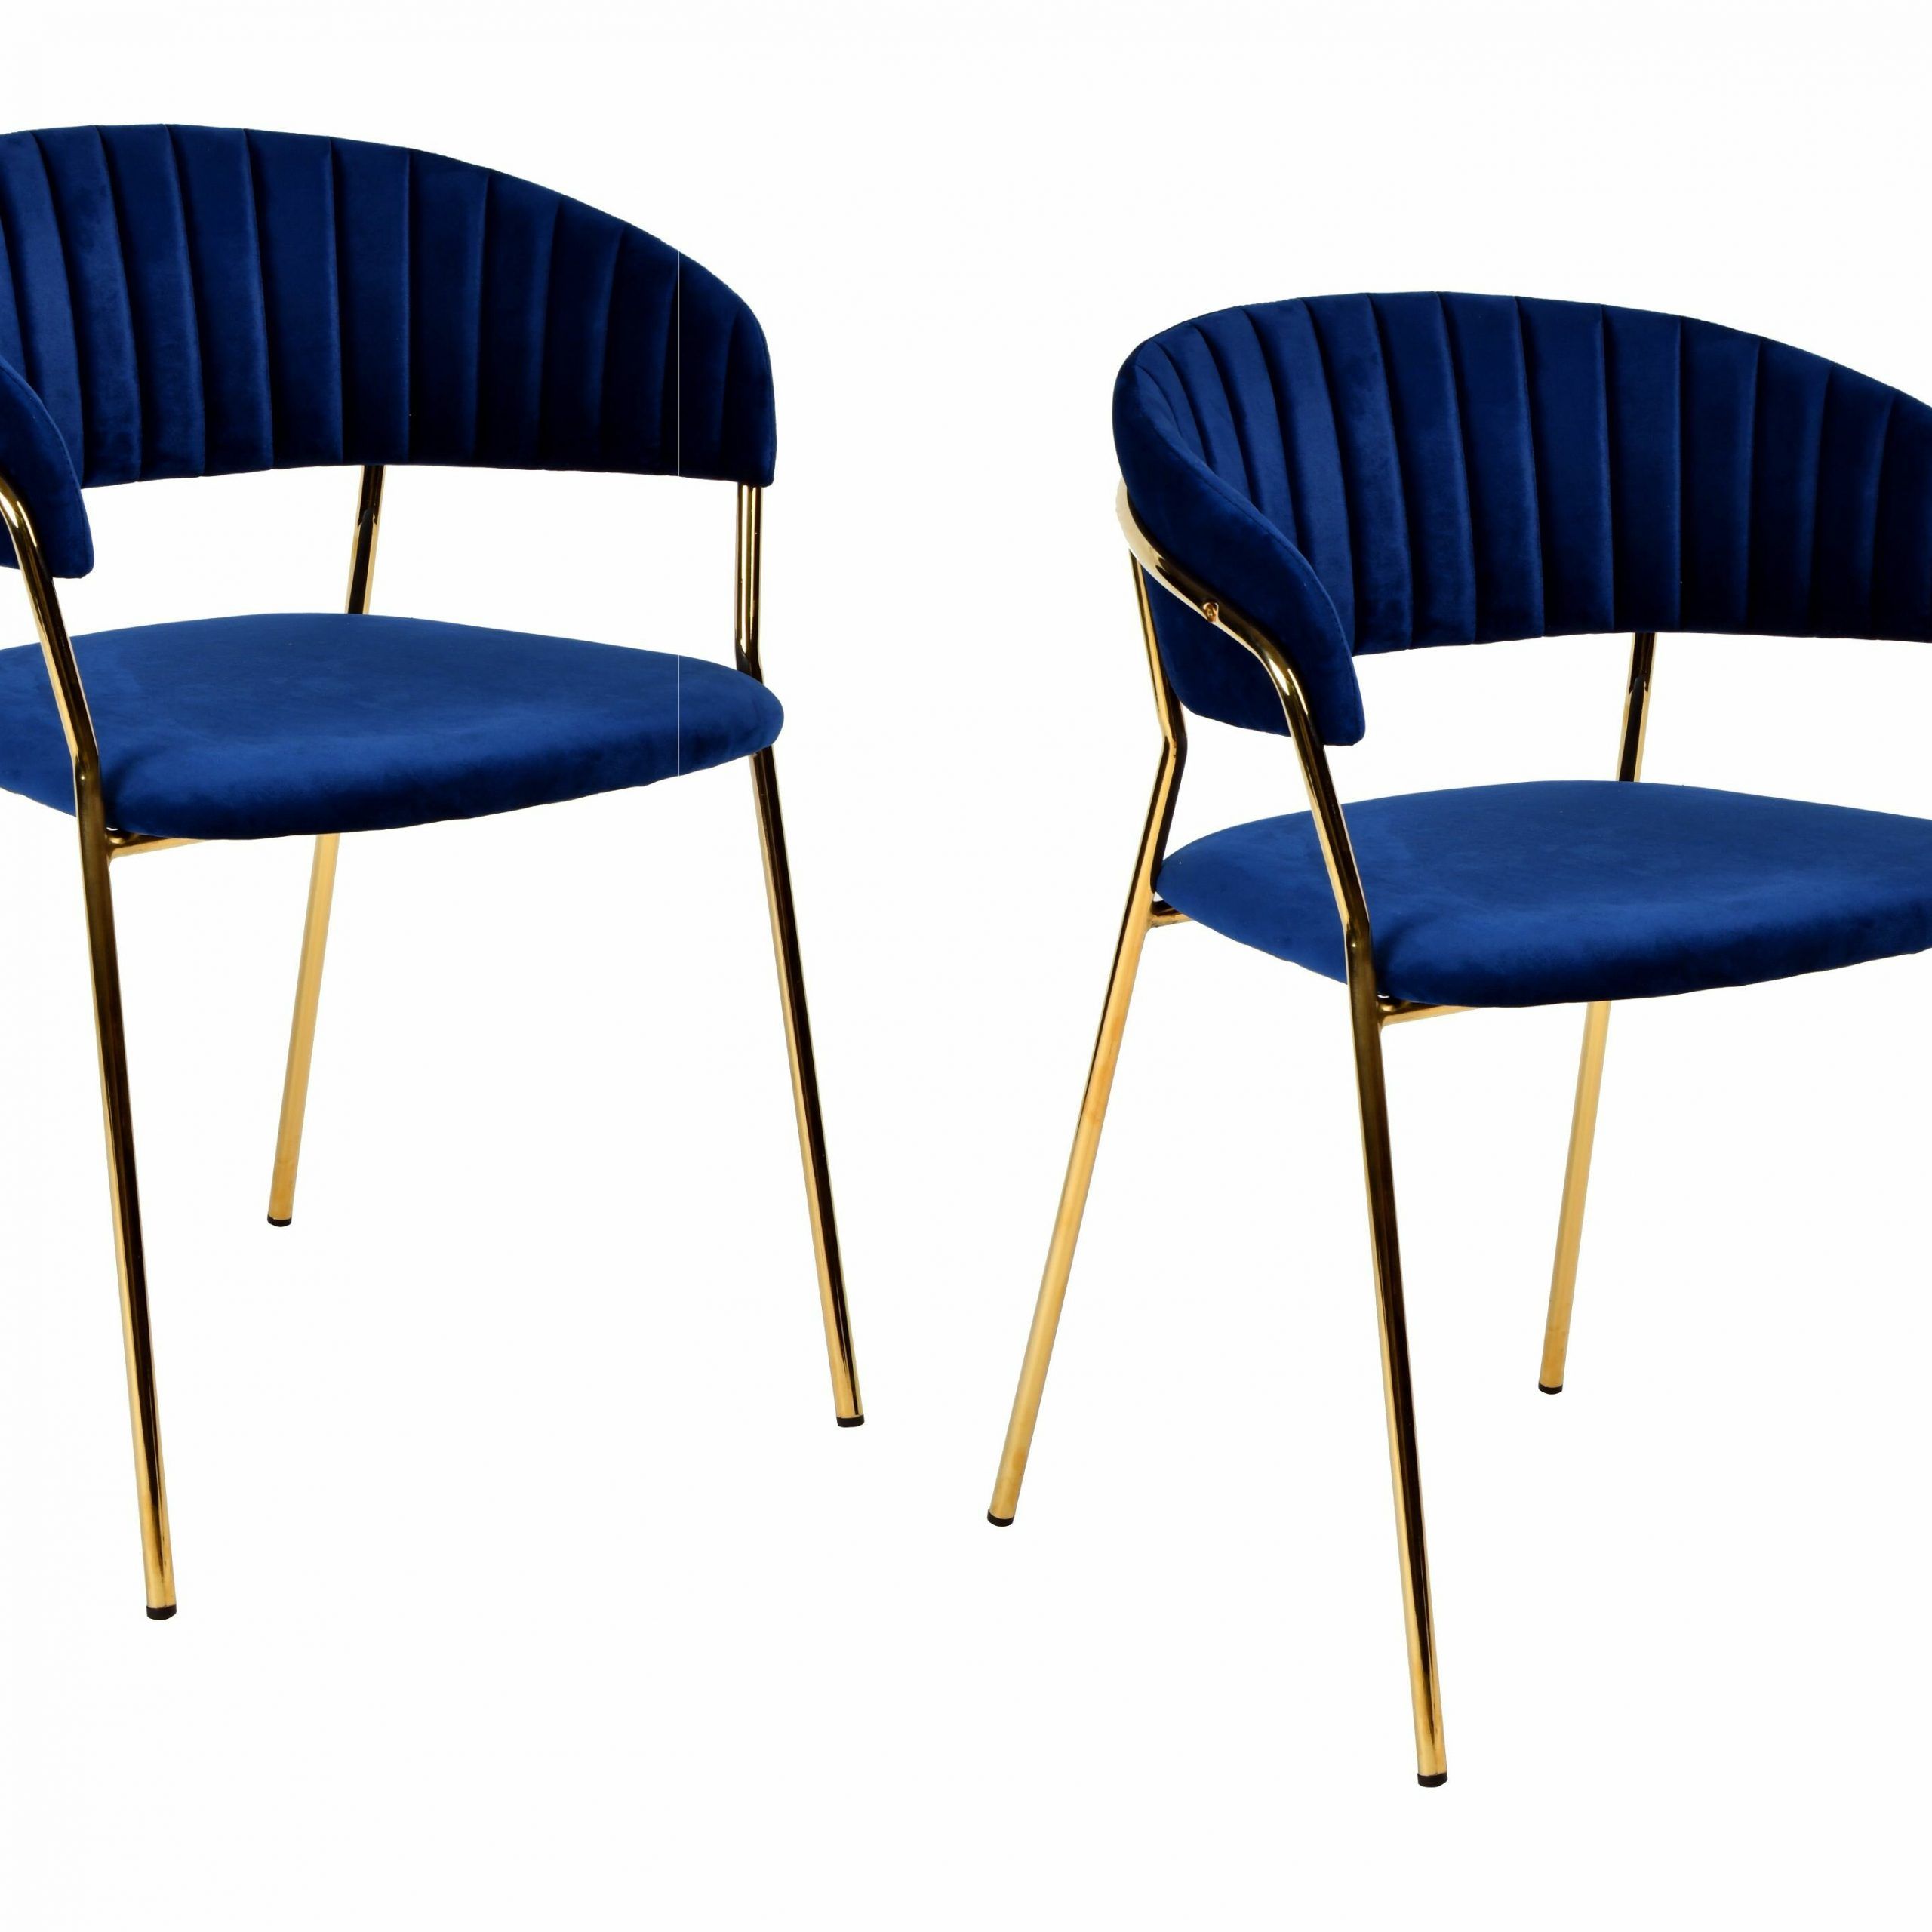 Albion Upholstered Dining Chair Regarding Bob Stripe Upholstered Dining Chairs (Set Of 2) (View 8 of 15)